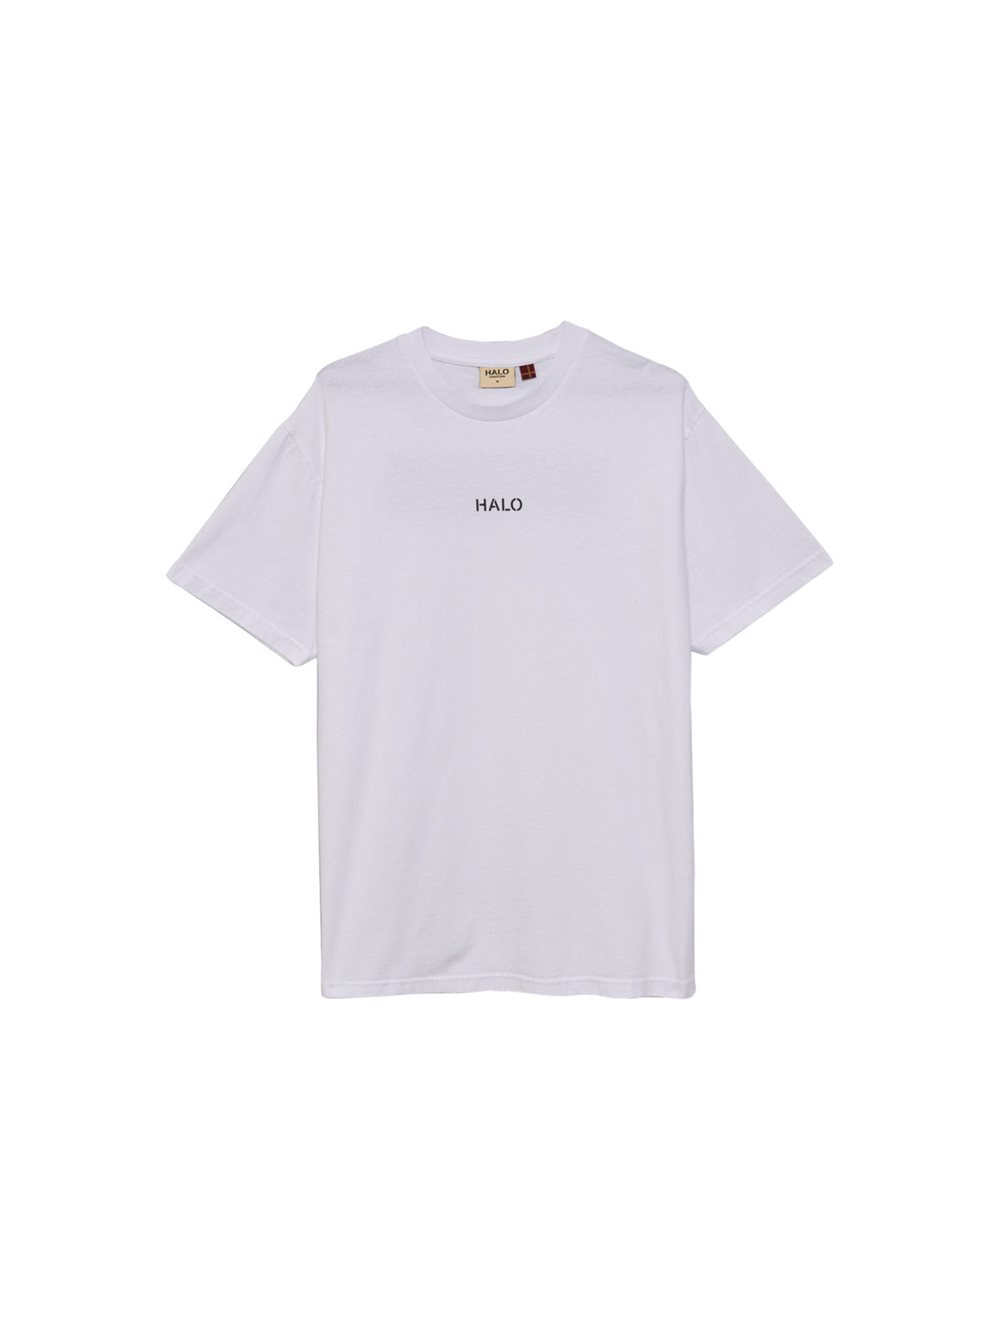 Graphic T-Shirt White Unisex